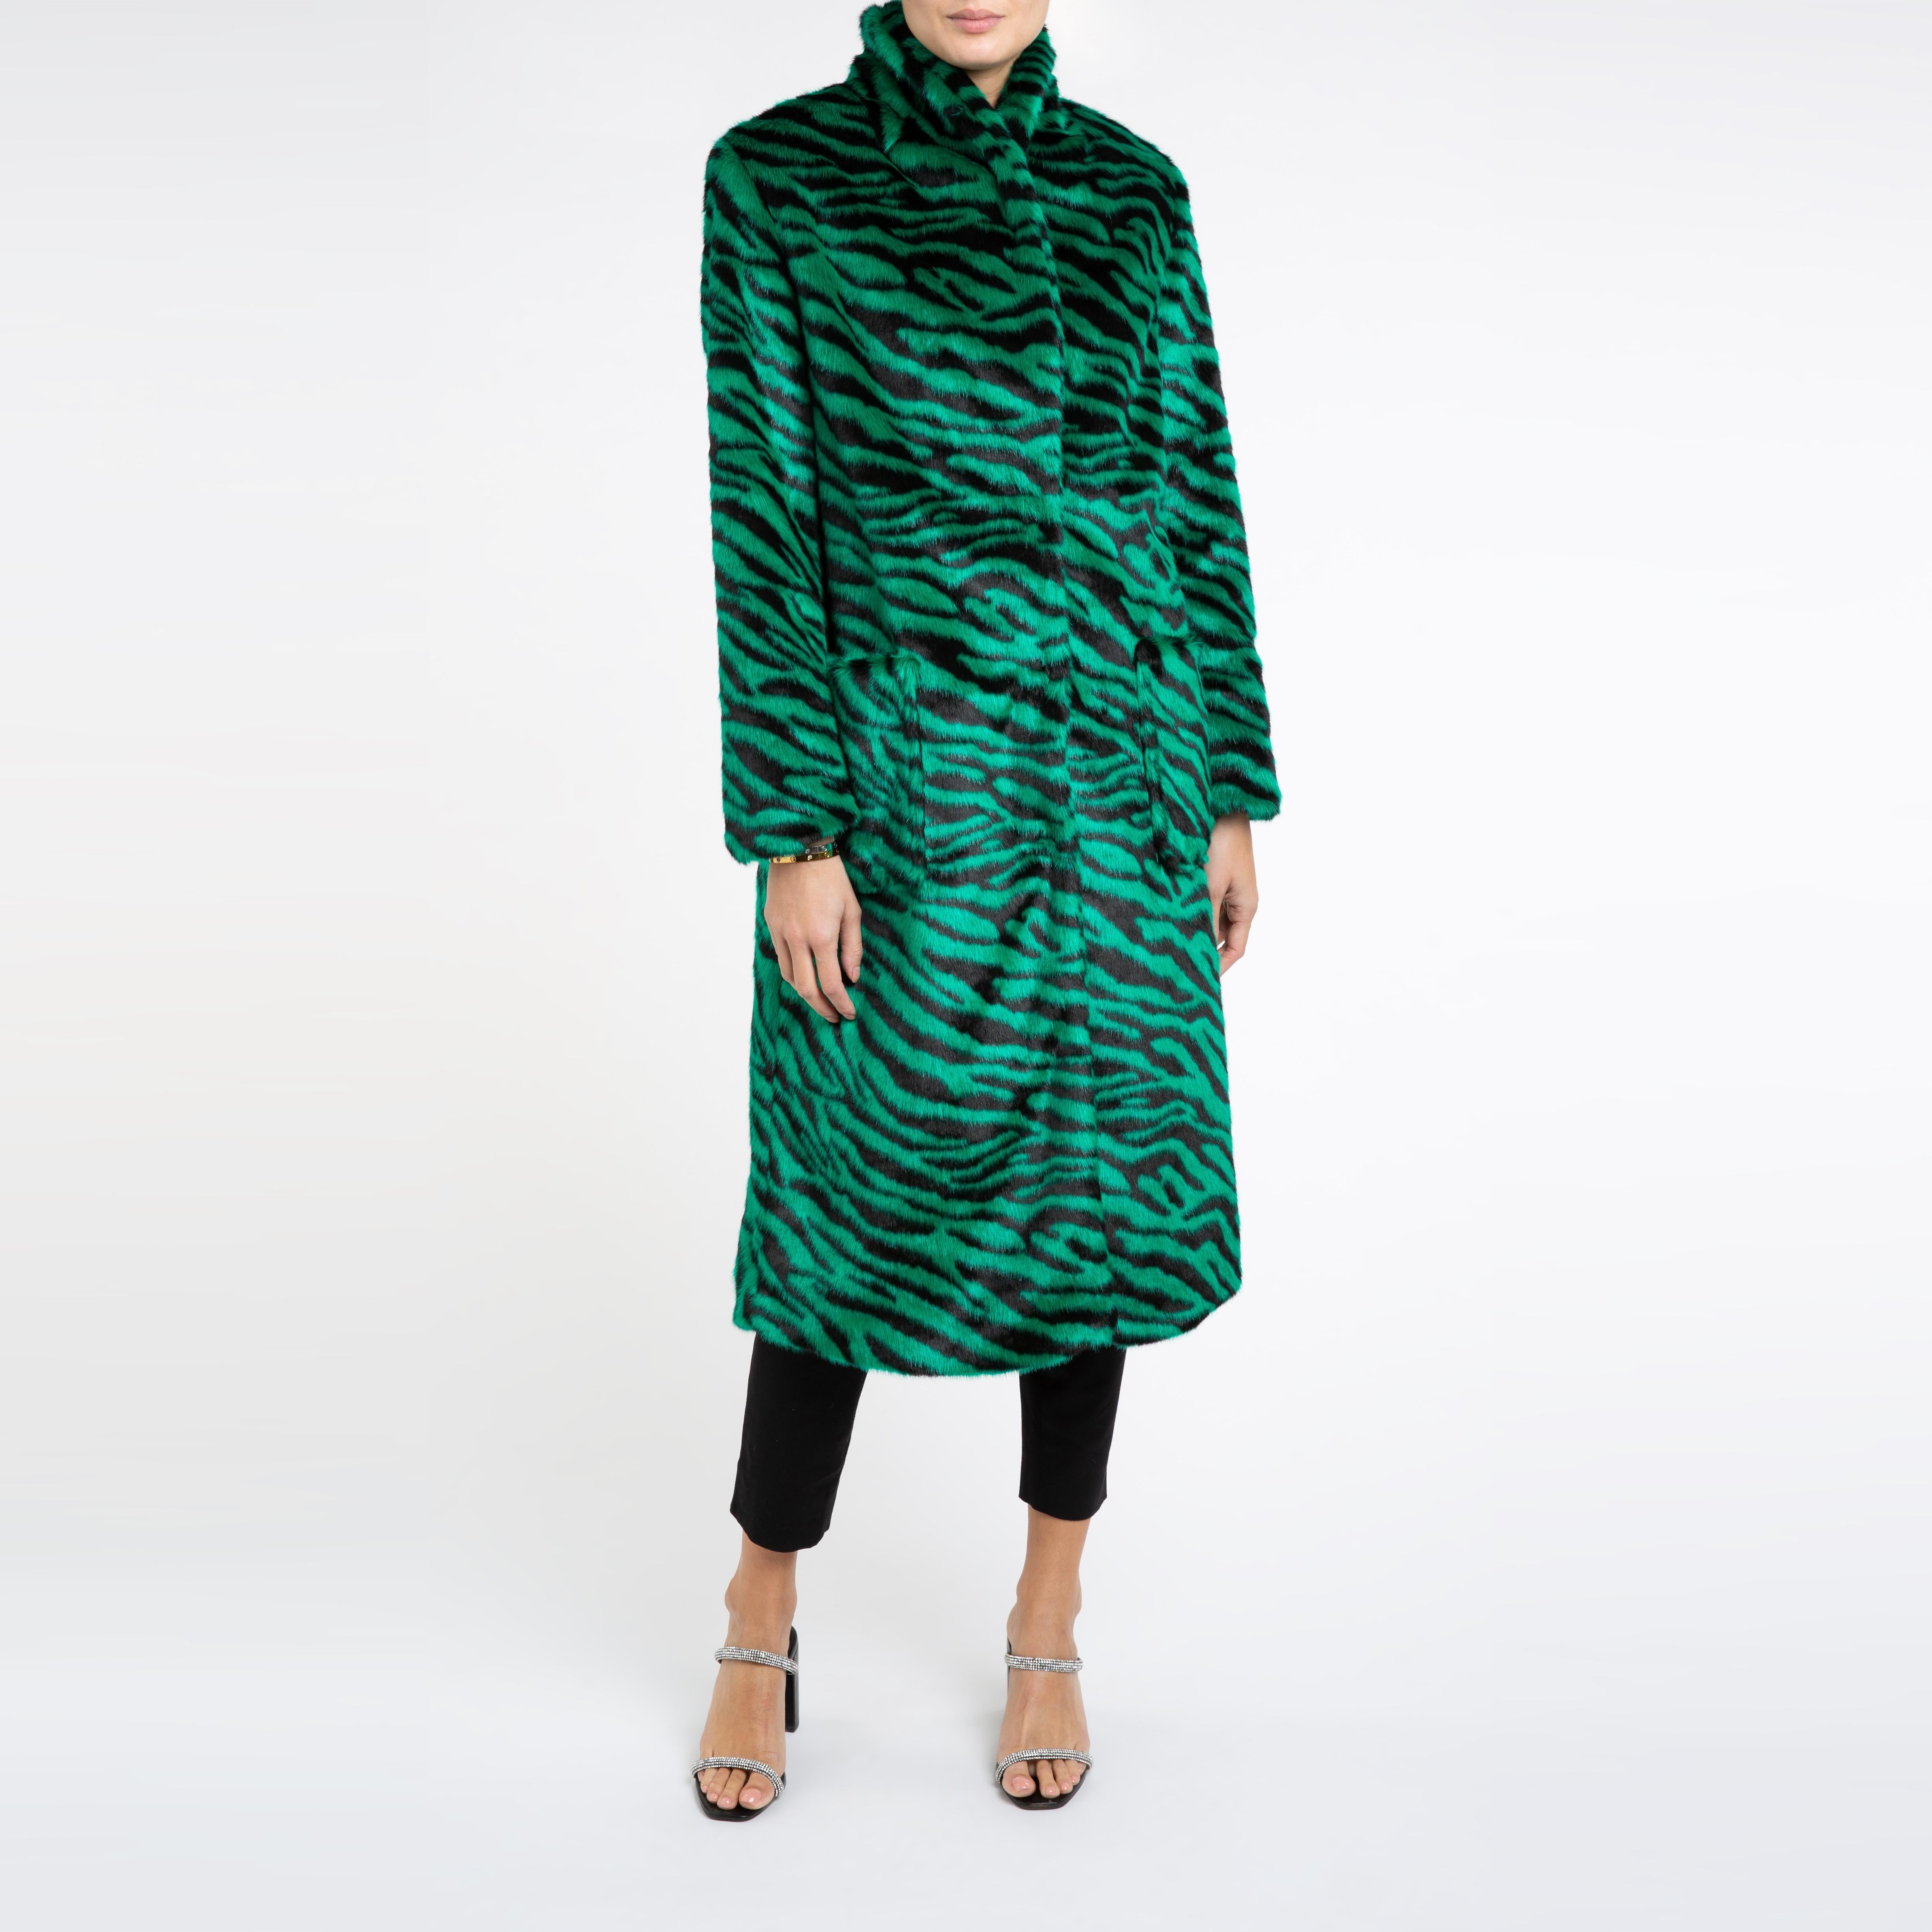 Women's Verheyen London Esmeralda Faux Fur Coat in Emerald Green Zebra Print size uk 12 For Sale